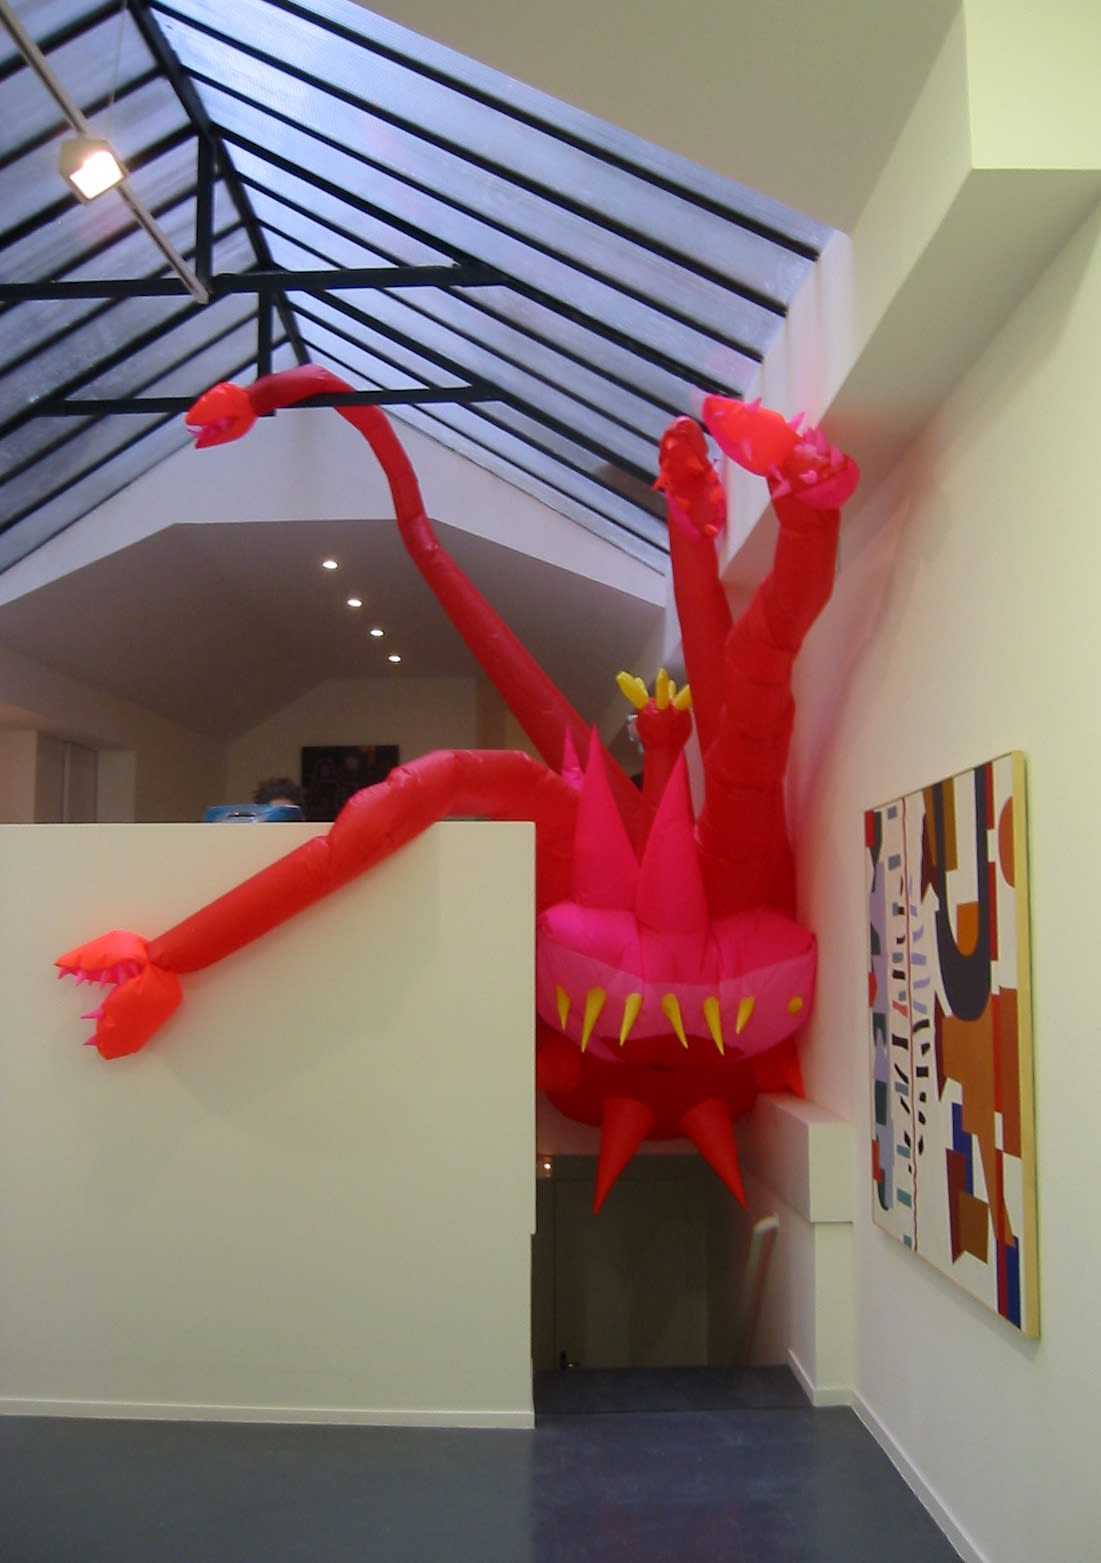 Gallery Nathalie Obadia celebrates its tenth anniversary